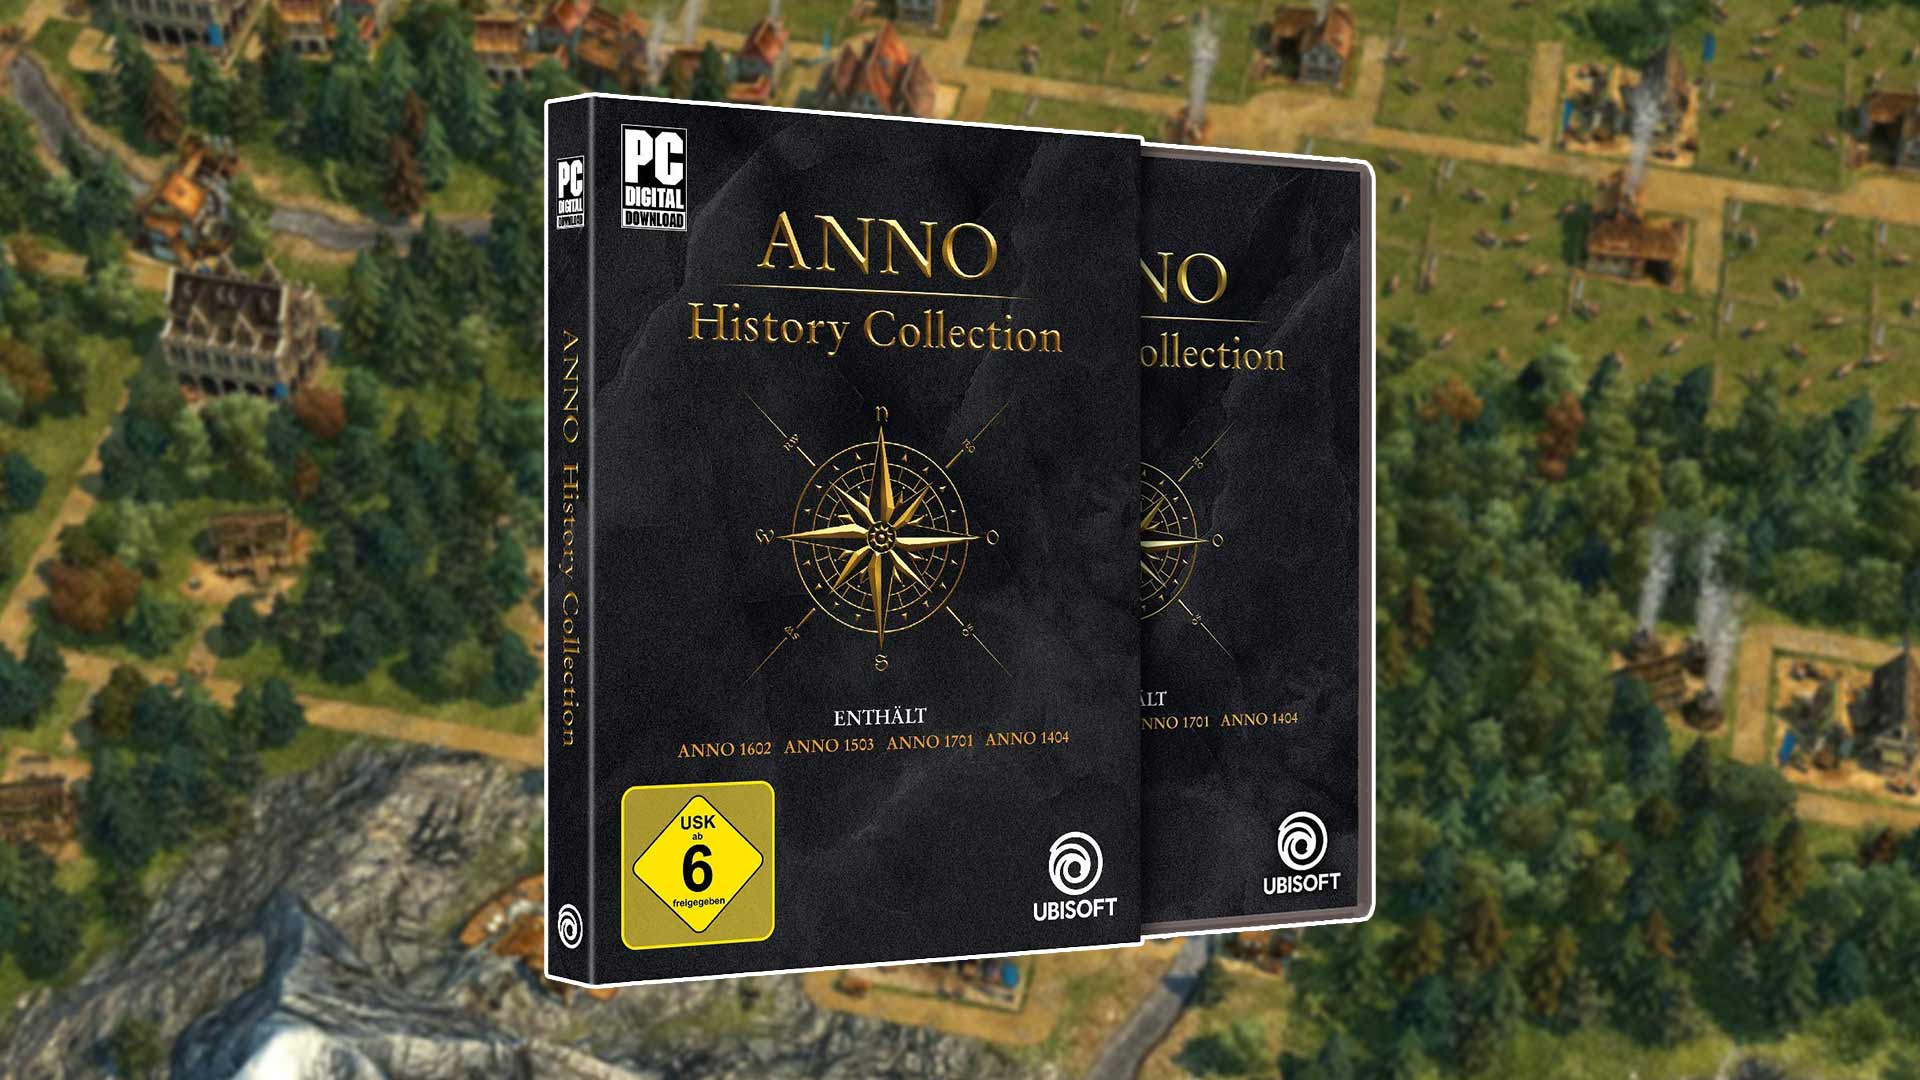 Collection Amazon Anno 15 jetzt mit Rabatt Angebot: History Euro